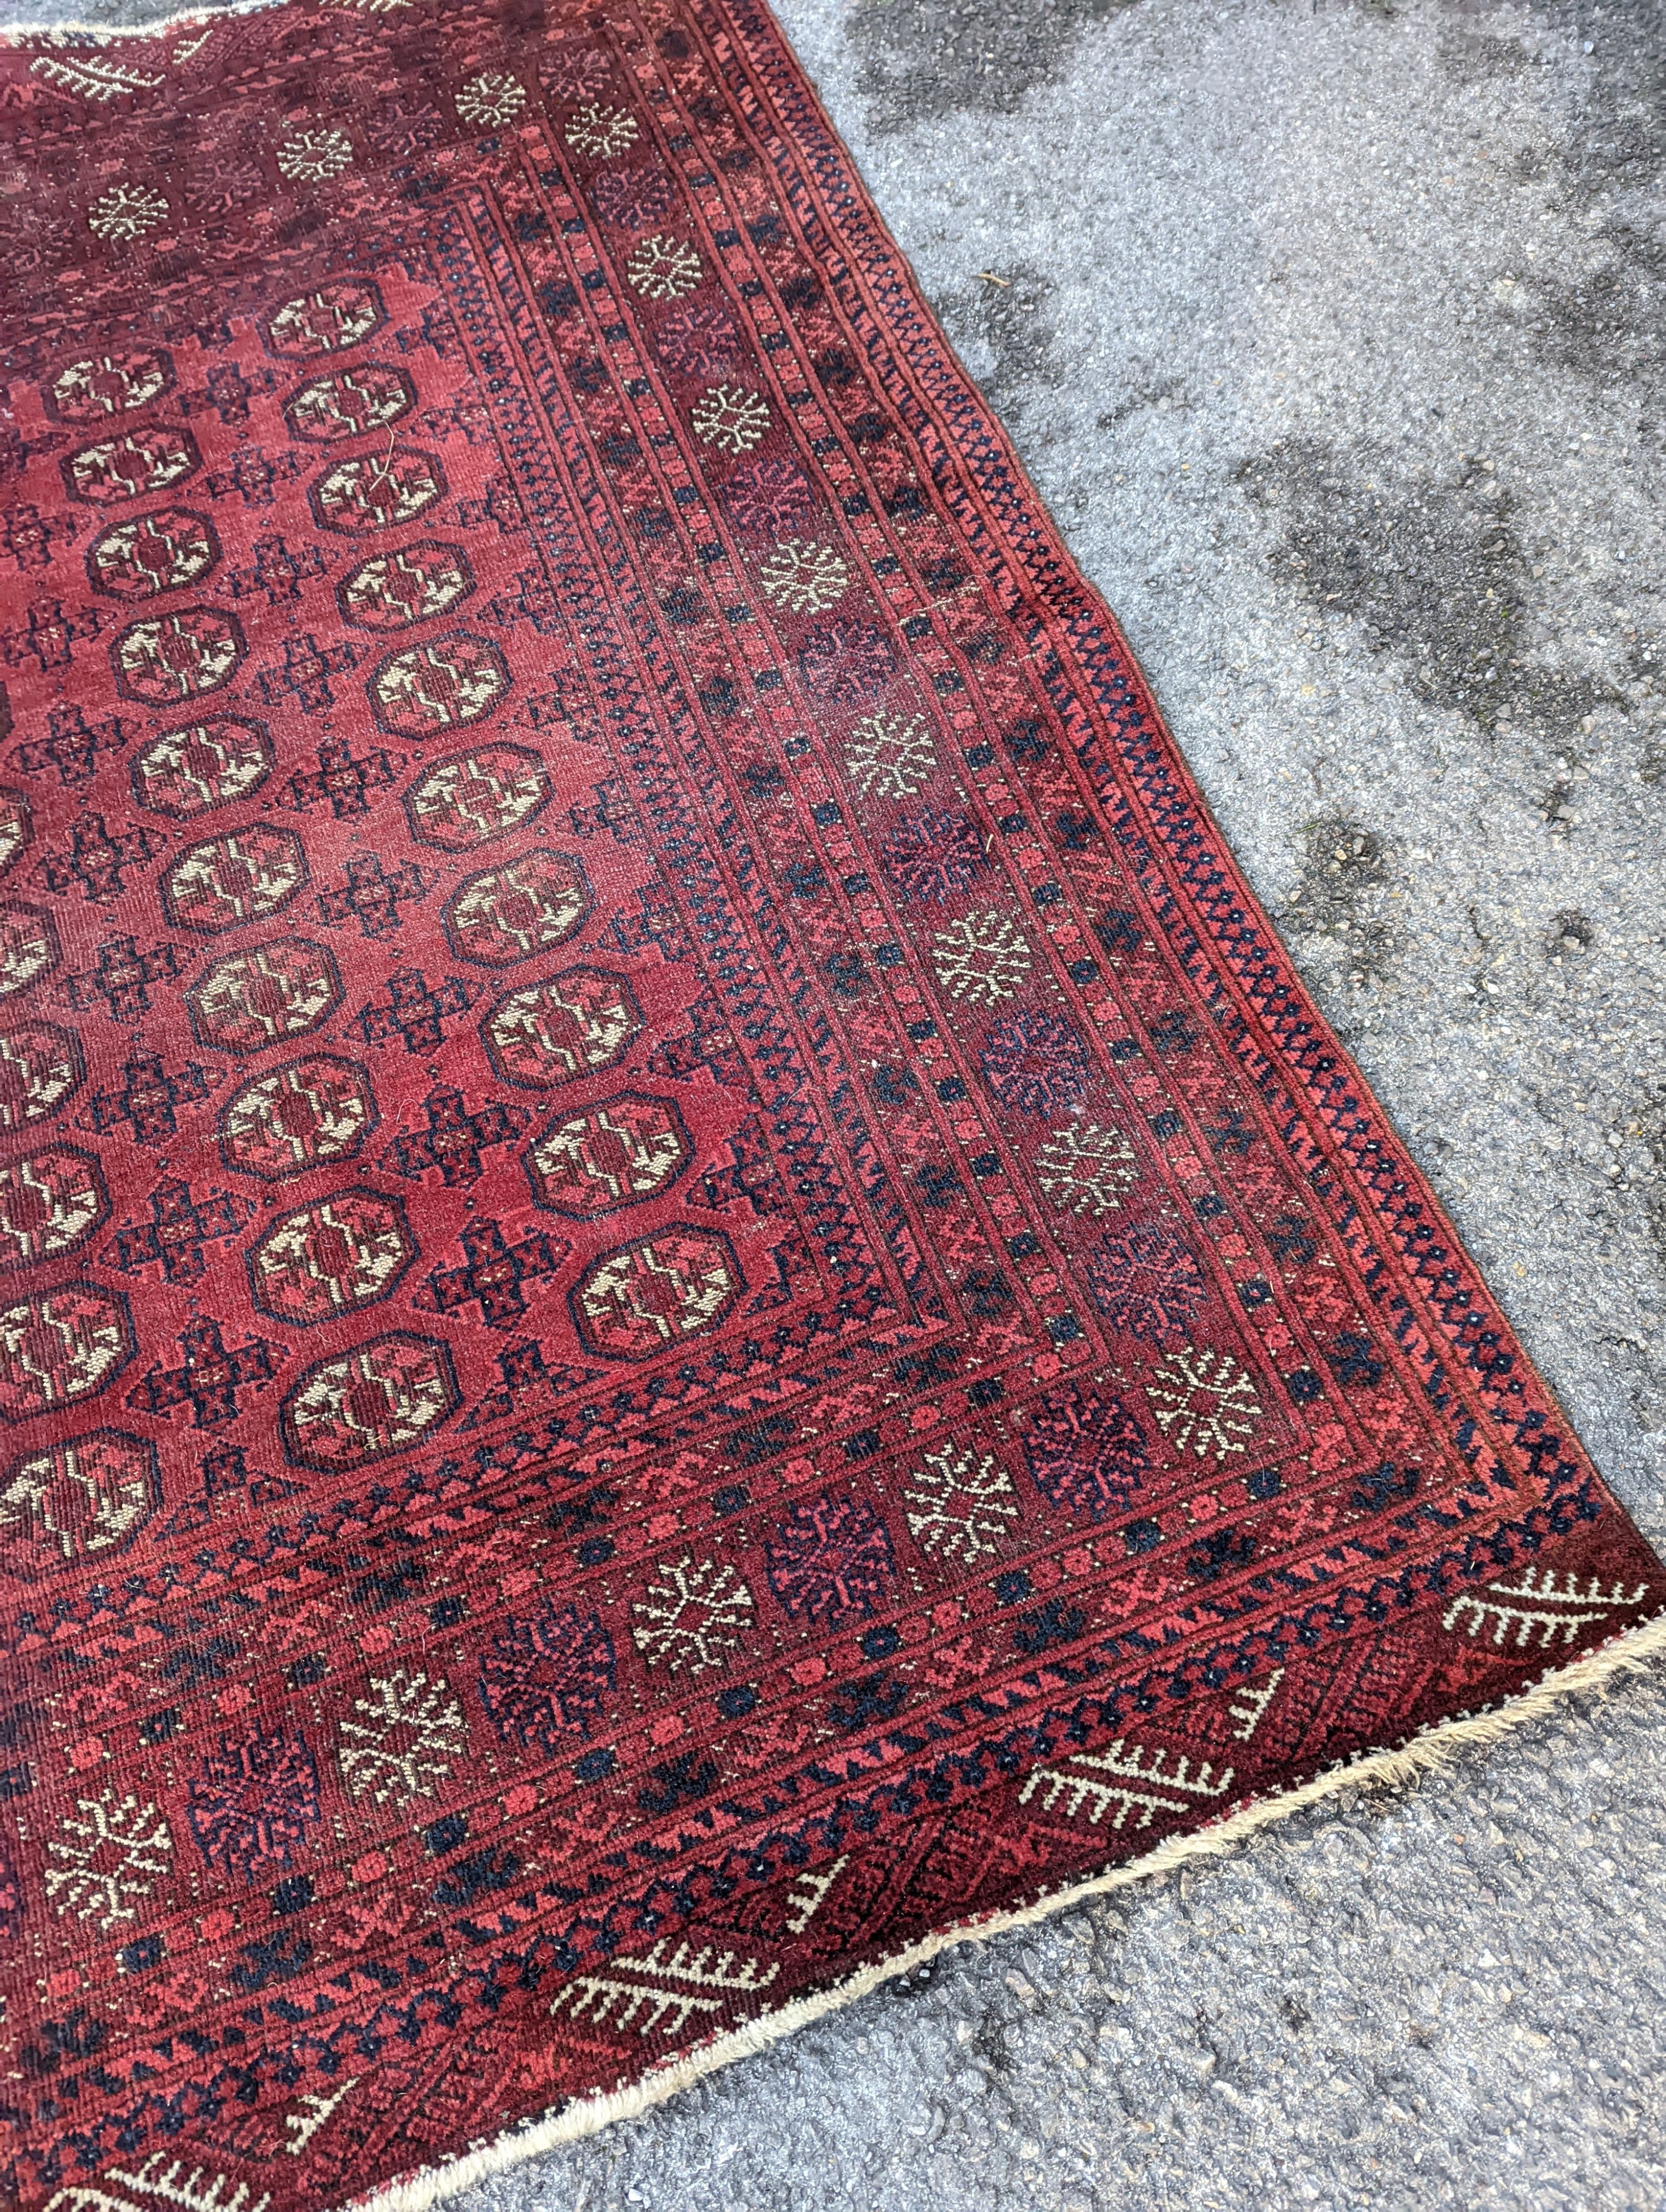 A Bokhara red ground rug, 176 x 135cm